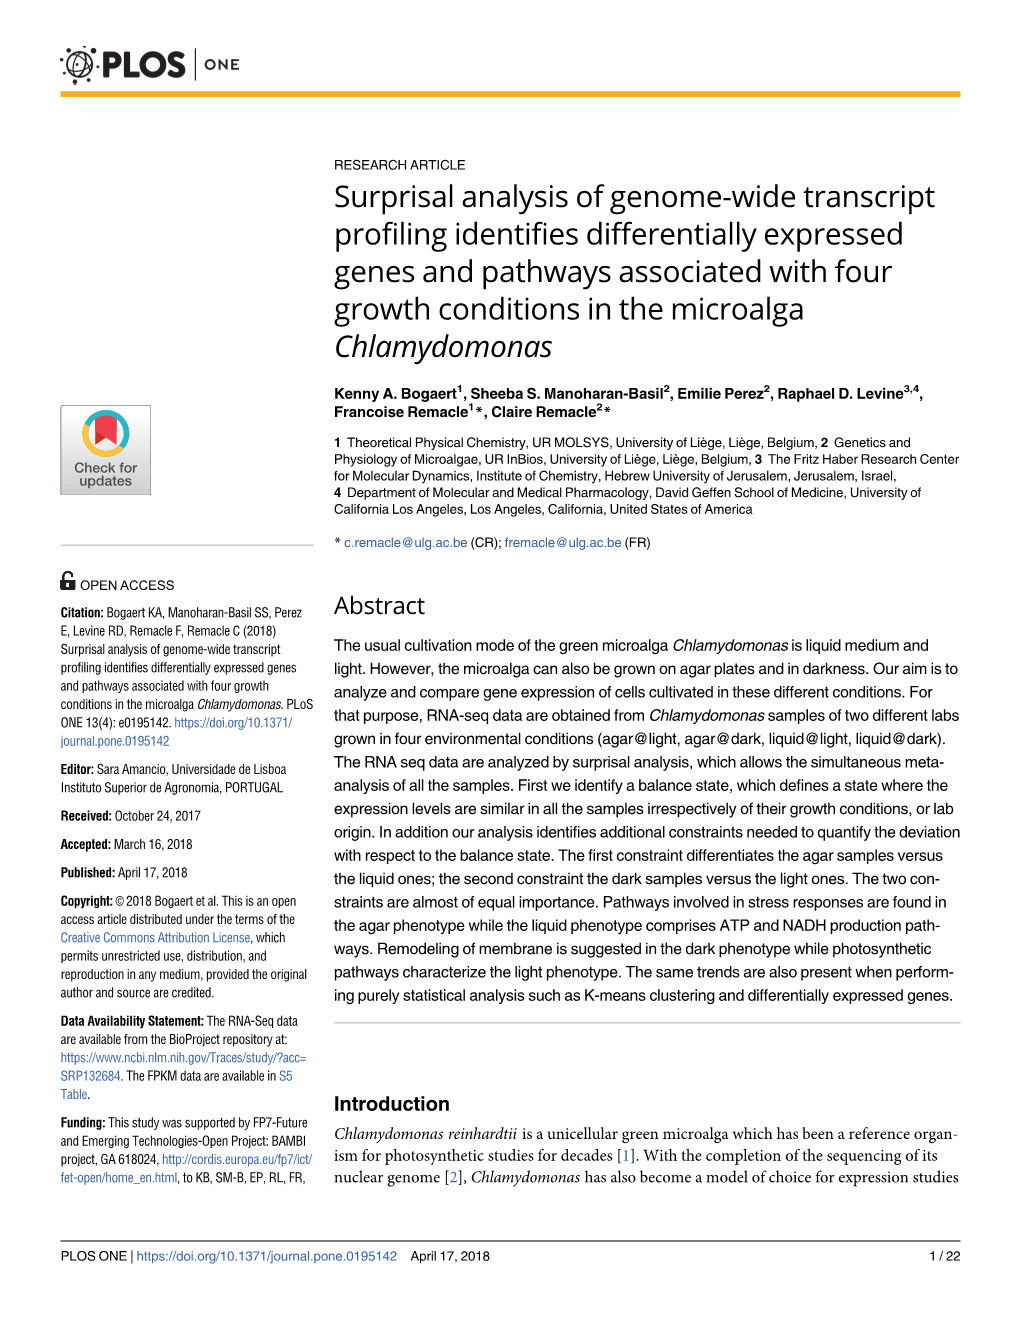 Surprisal Analysis of Genome-Wide Transcript Profiling Identifies